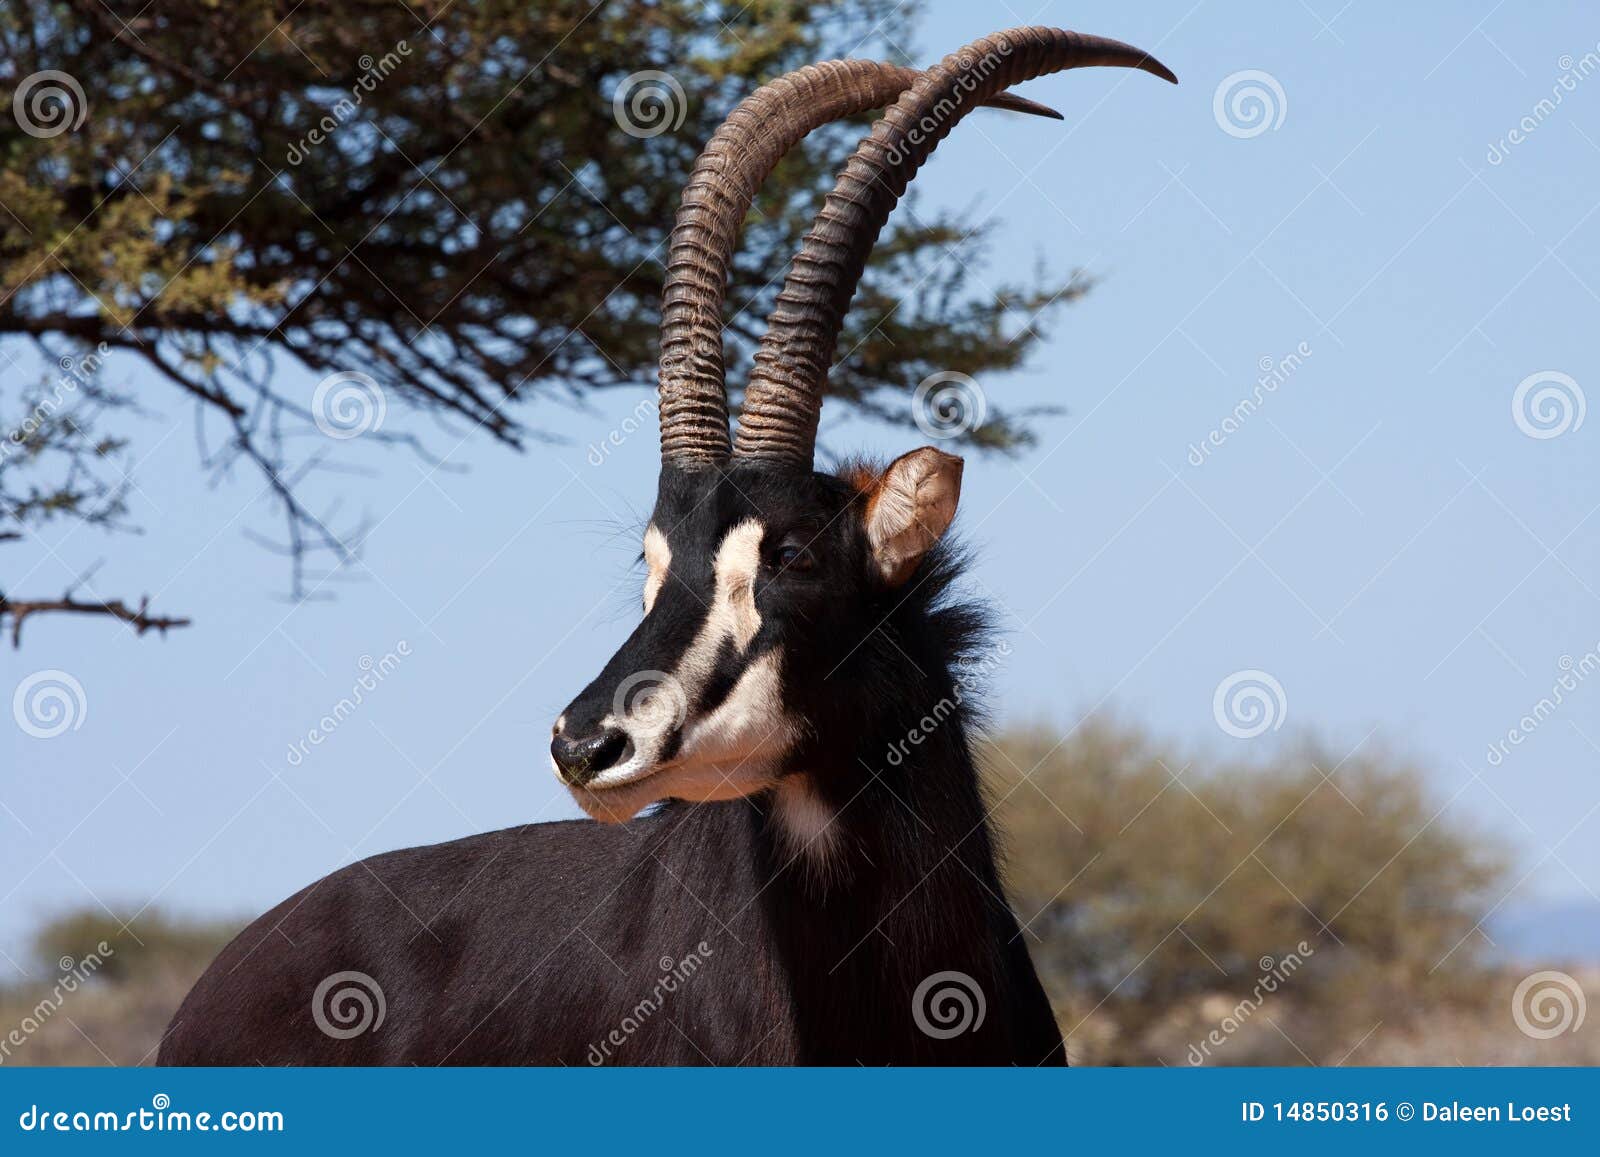 male sable antelope